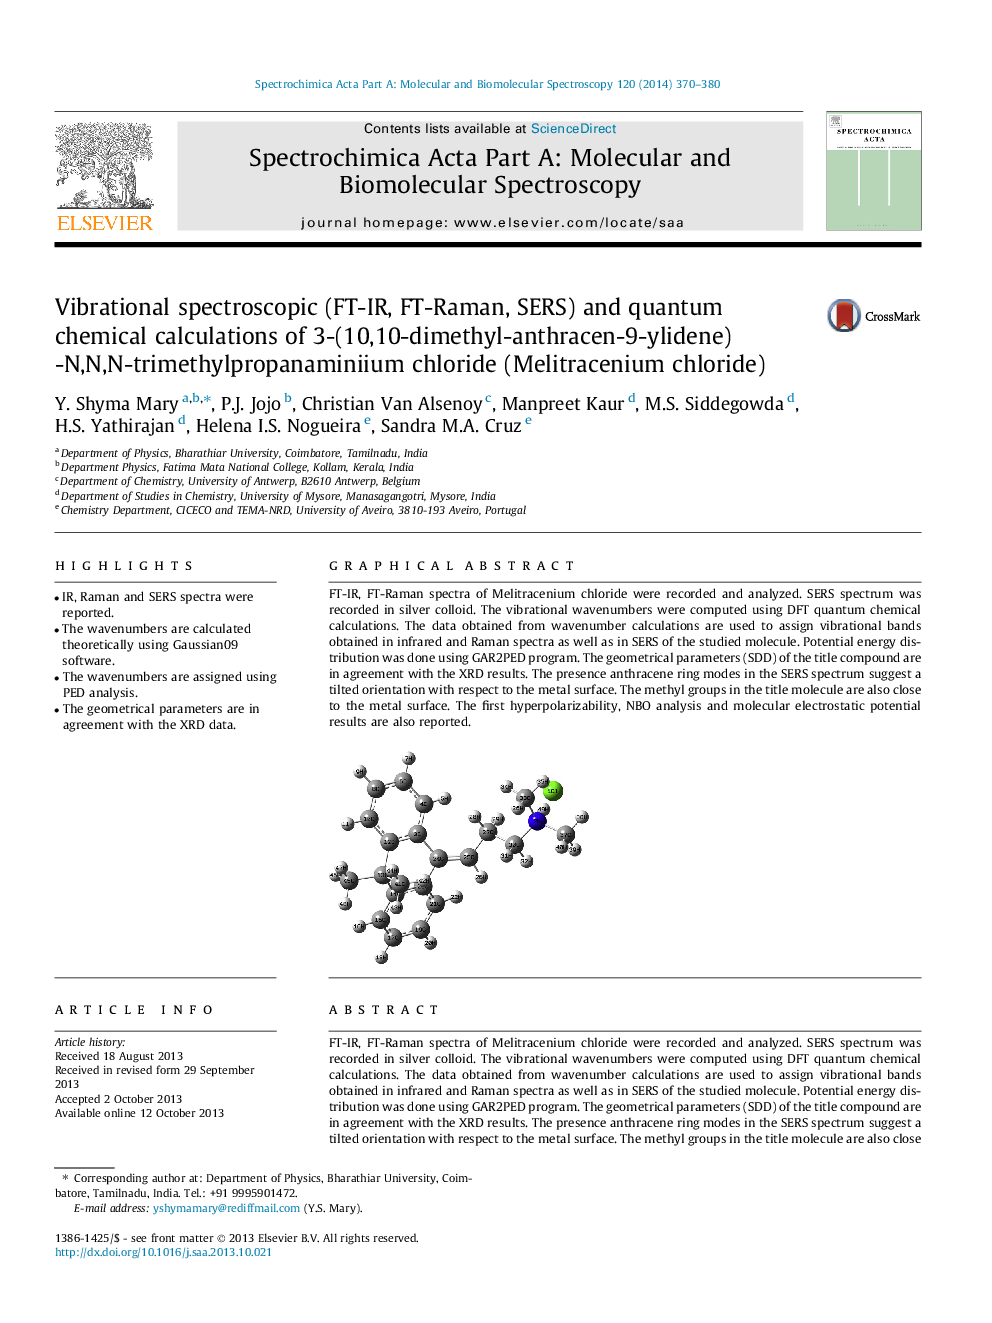 Vibrational spectroscopic (FT-IR, FT-Raman, SERS) and quantum chemical calculations of 3-(10,10-dimethyl-anthracen-9-ylidene)-N,N,N-trimethylpropanaminiium chloride (Melitracenium chloride)